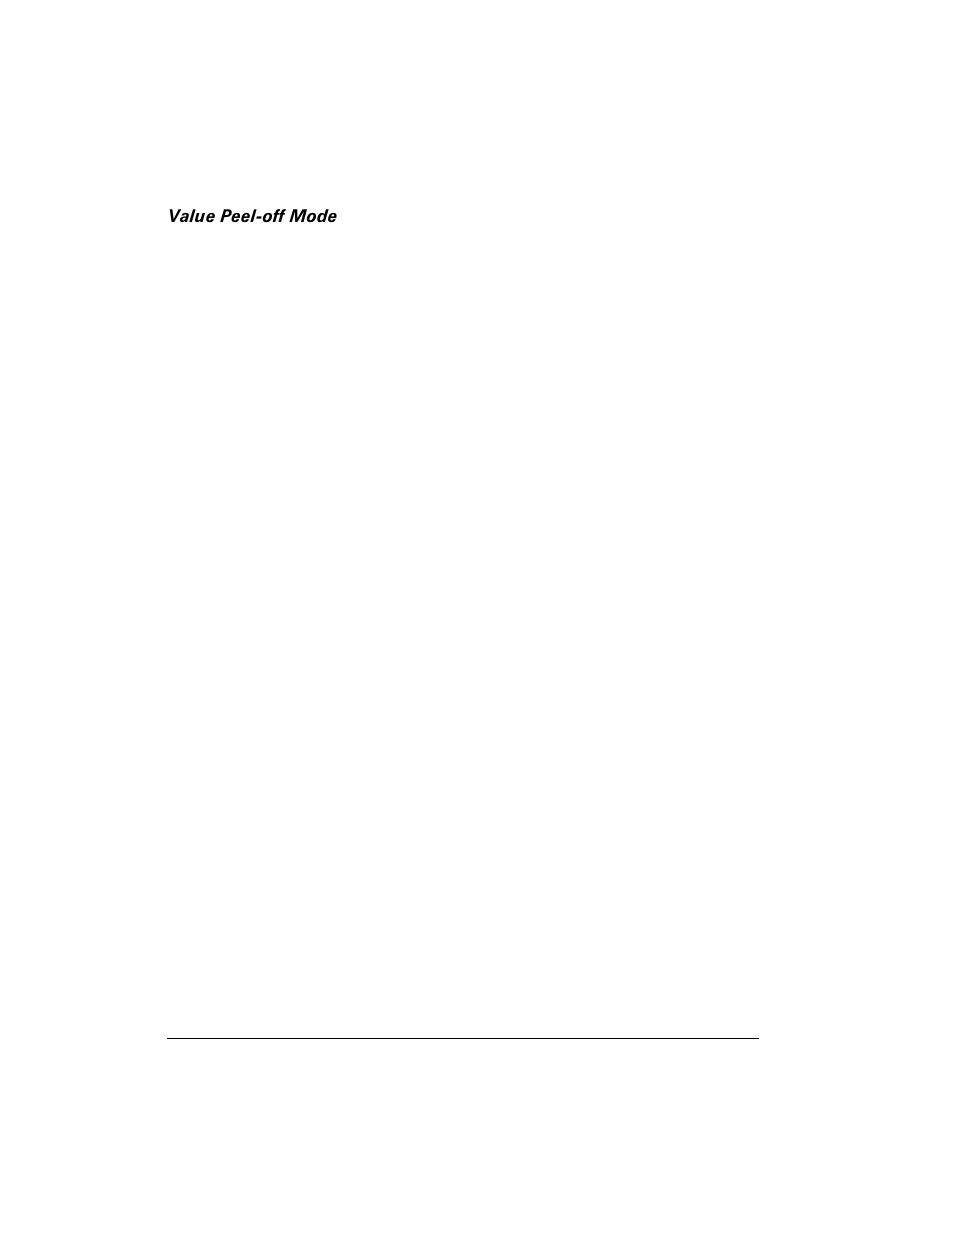 Value peel-off mode | Zebra Technologies Z6M User Manual | Page 32 / 112